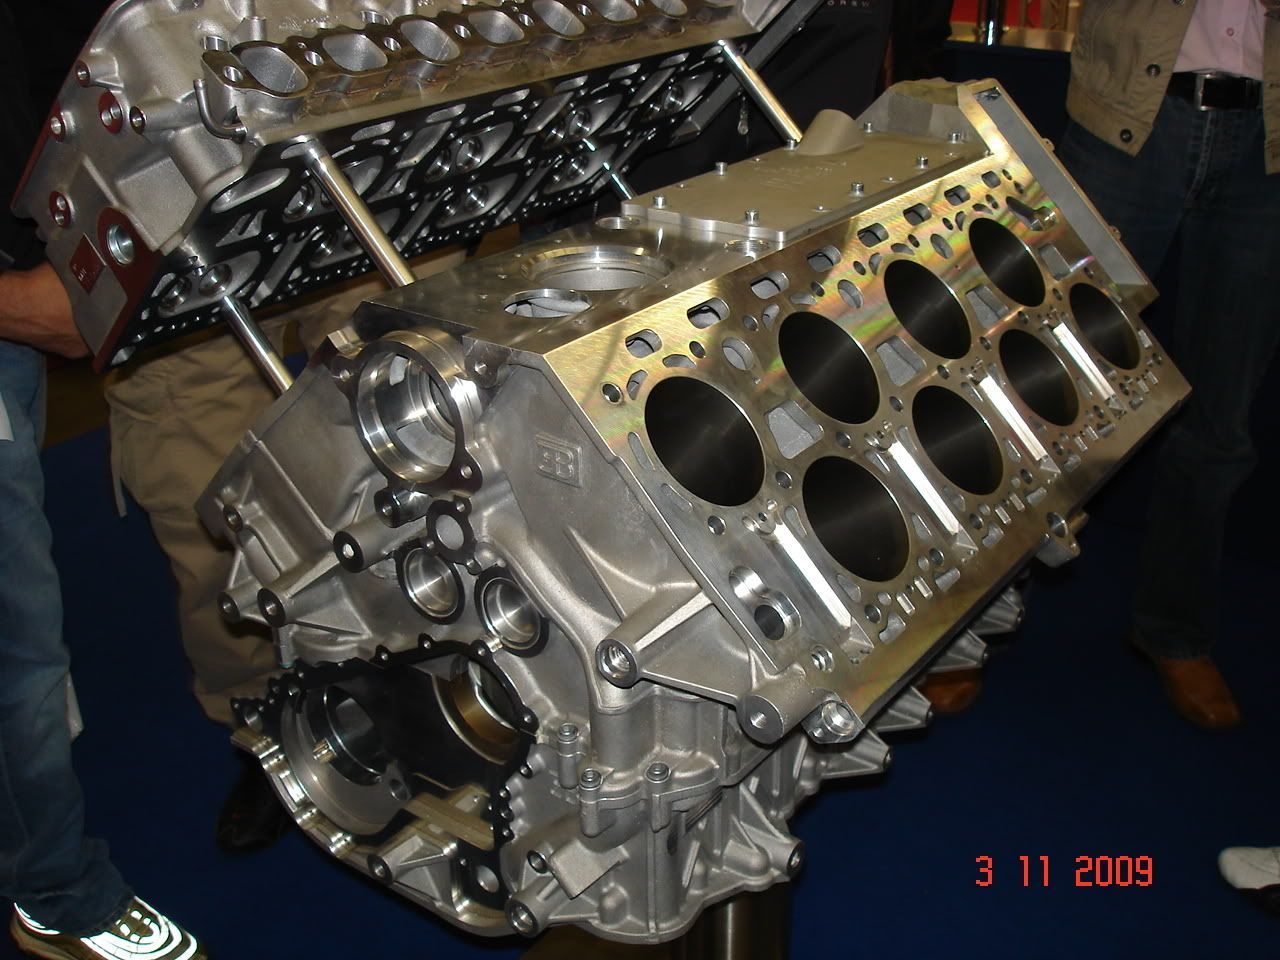 Best W16 Bugatti engine image. Bugatti engine, Bugatti